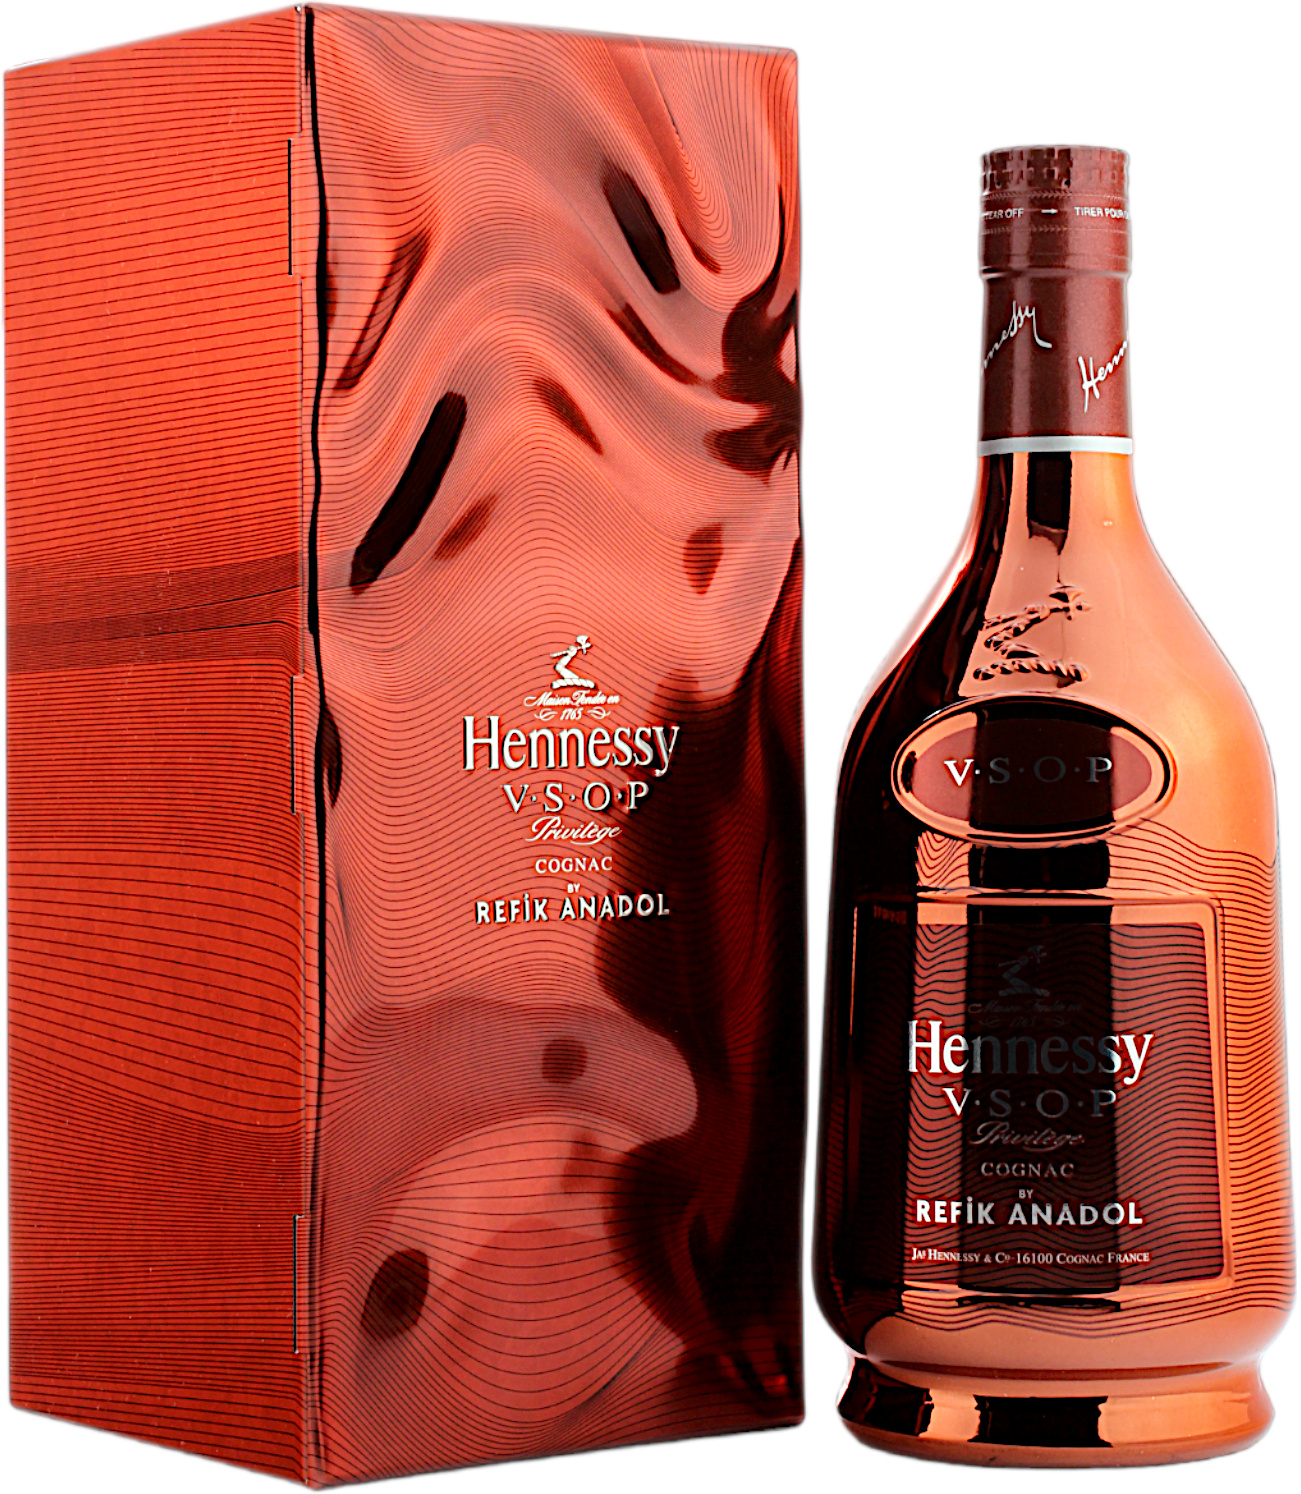 Hennessy VSOP Privilege Cognac Limited Edition Refik Anadol 2021 40.0% 0,7l